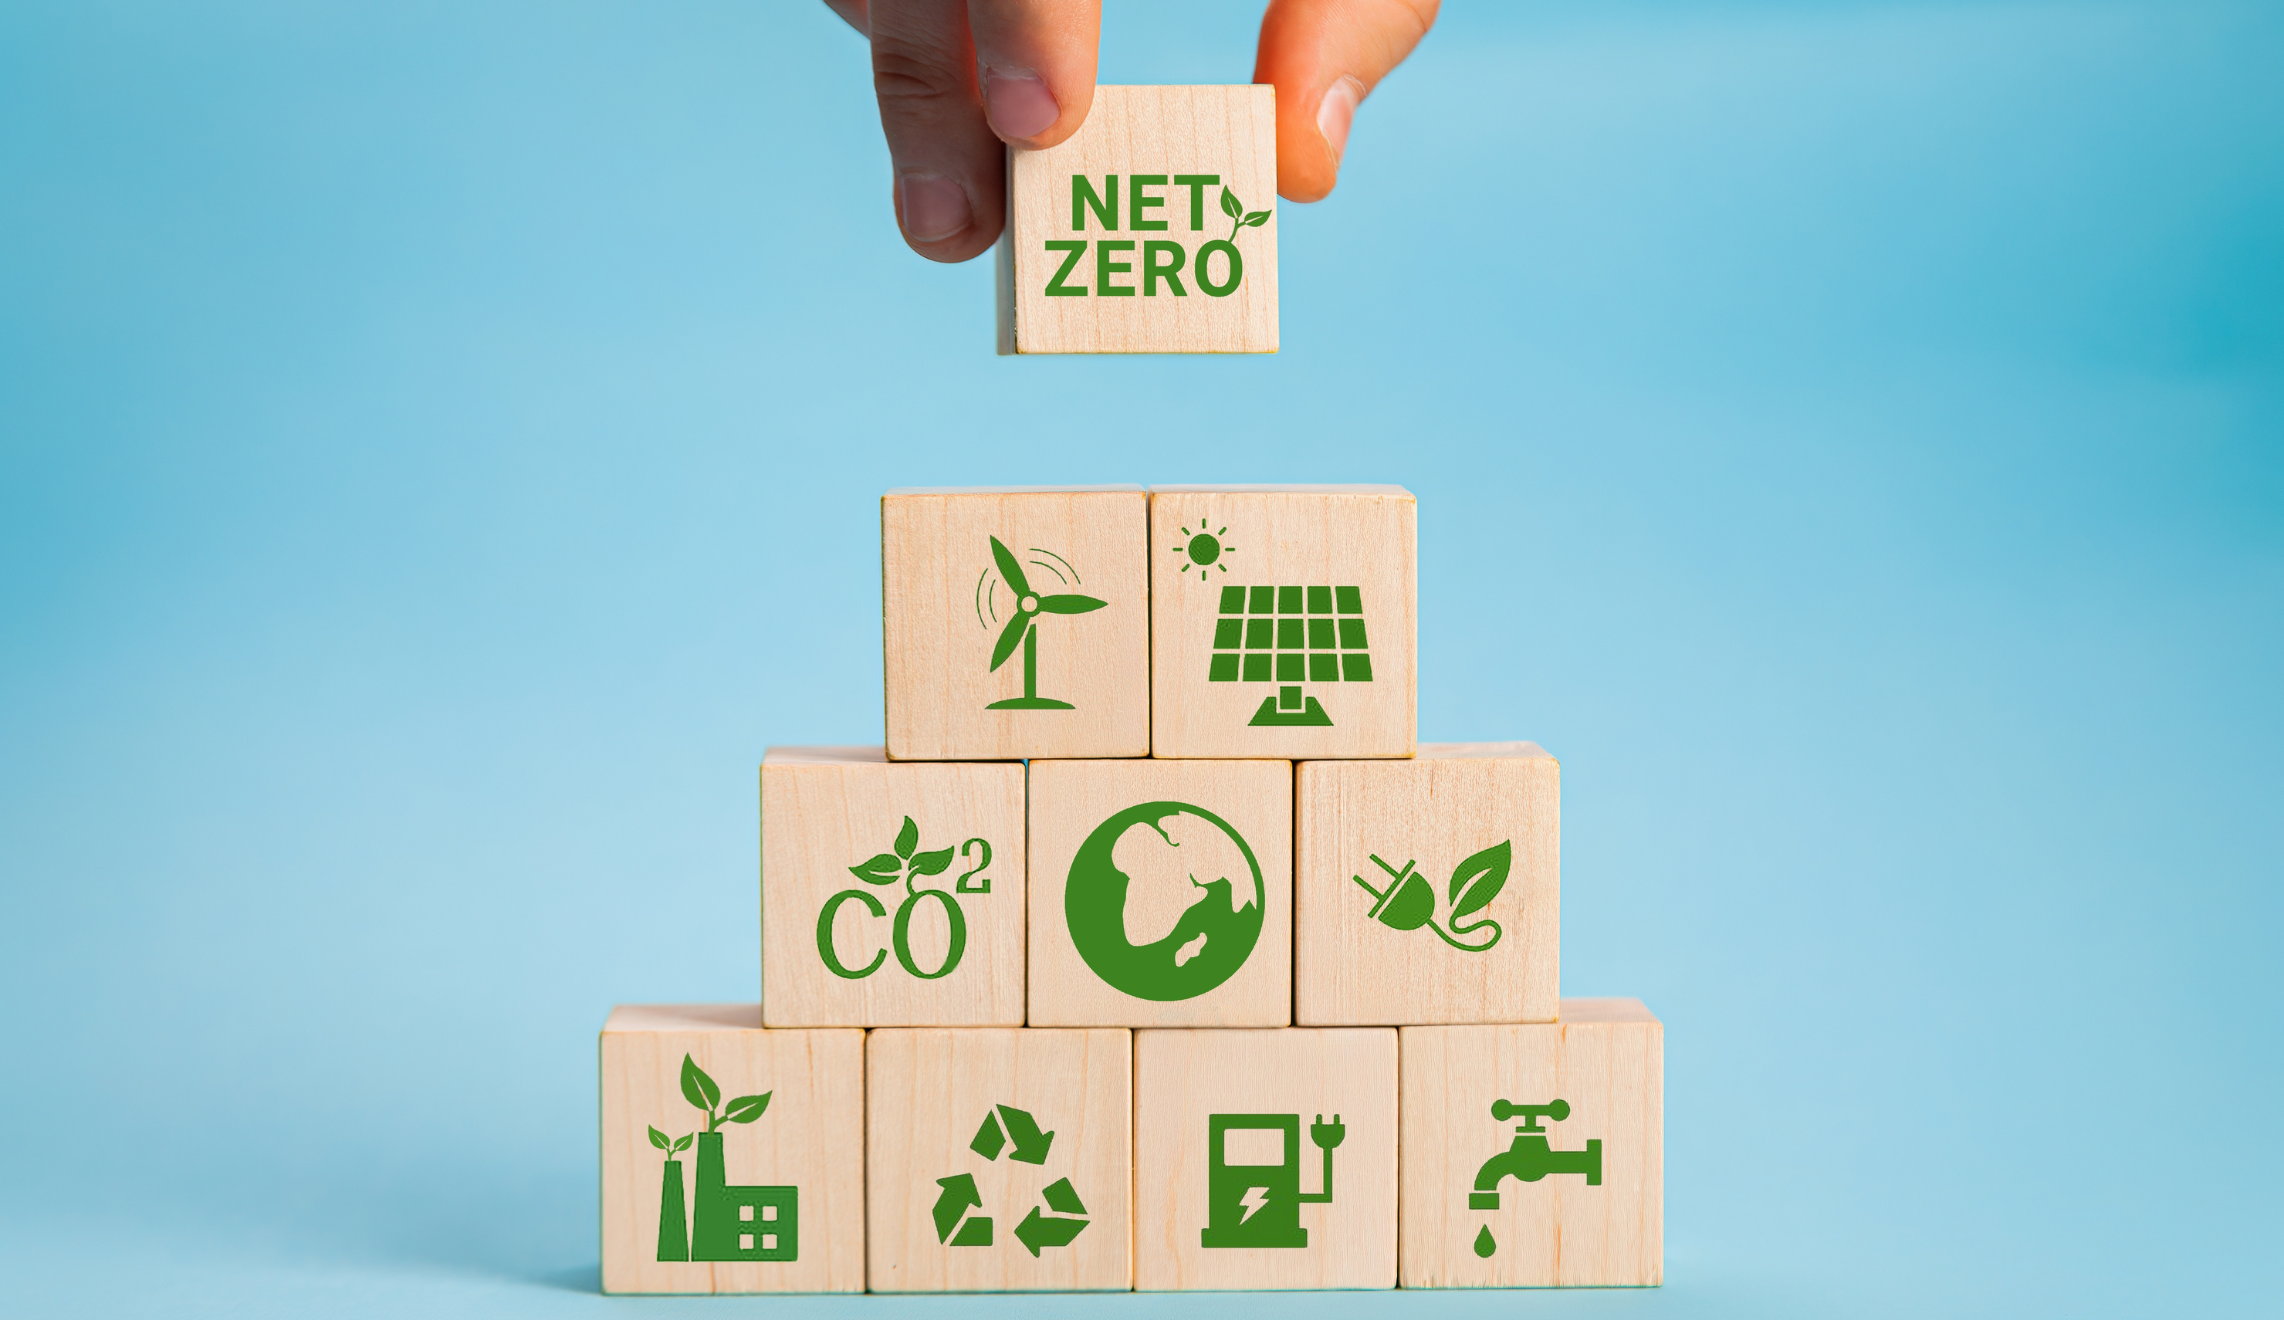 Less than 1% of small firms receiving net zero help Banner Photo